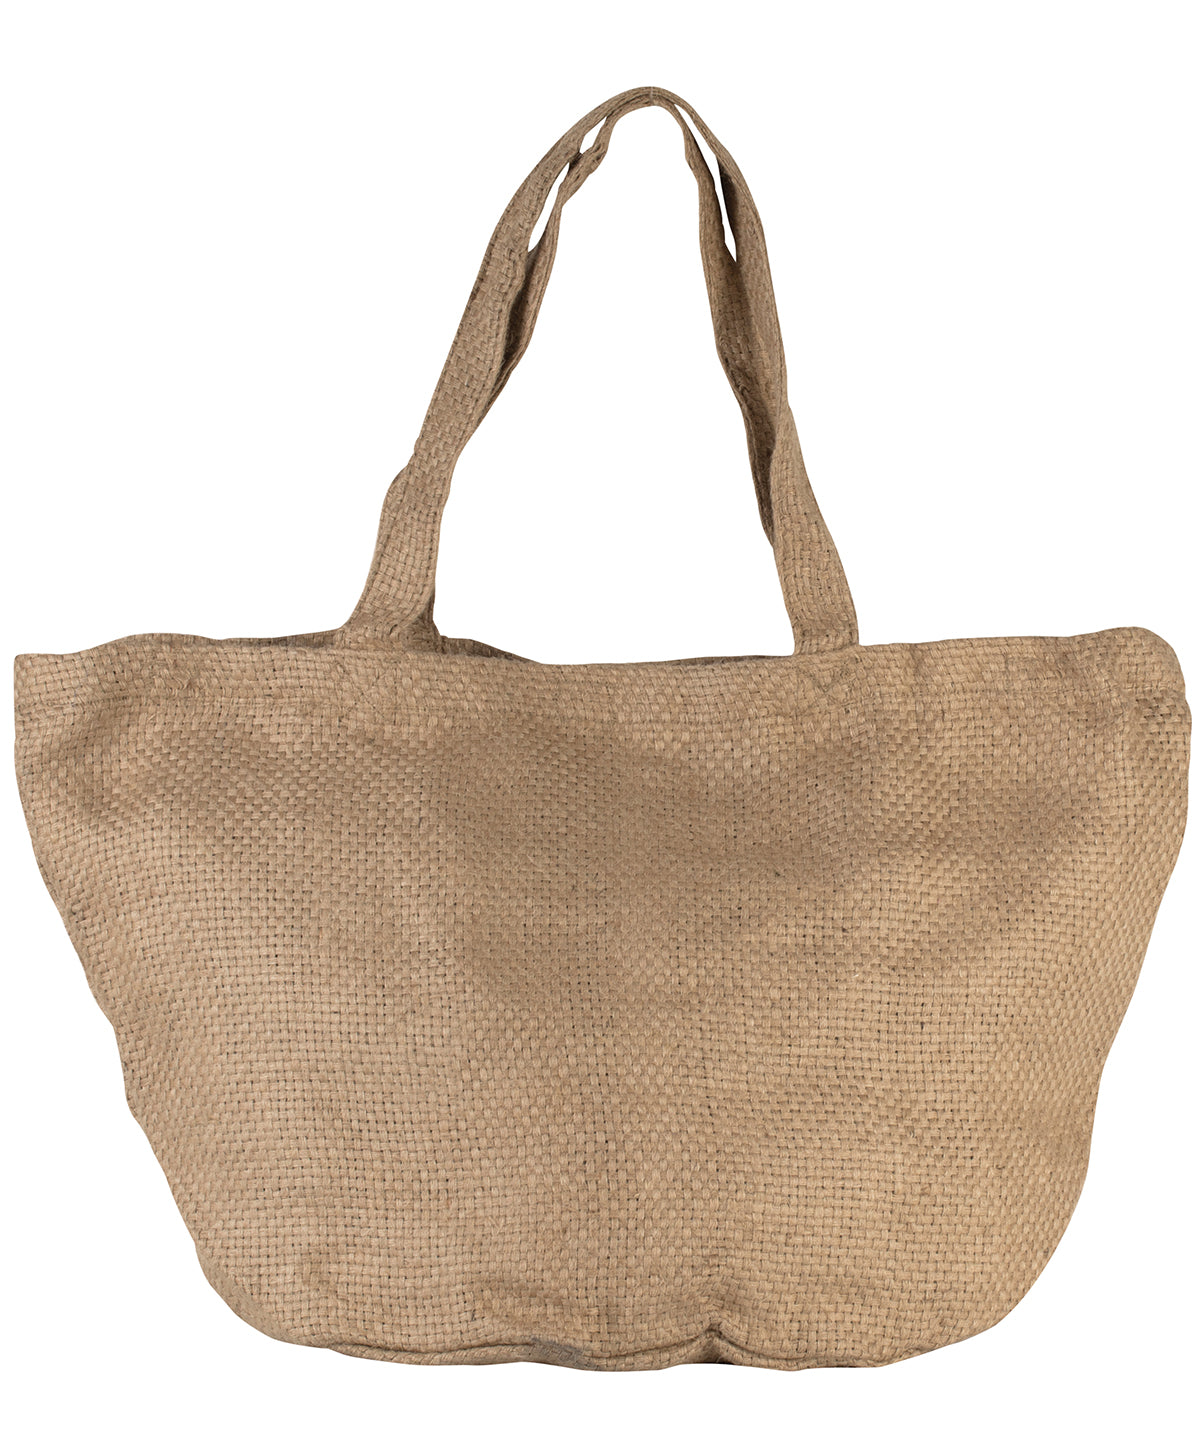 Töskur - 100% Natural Yarn Dyed Jute Bag